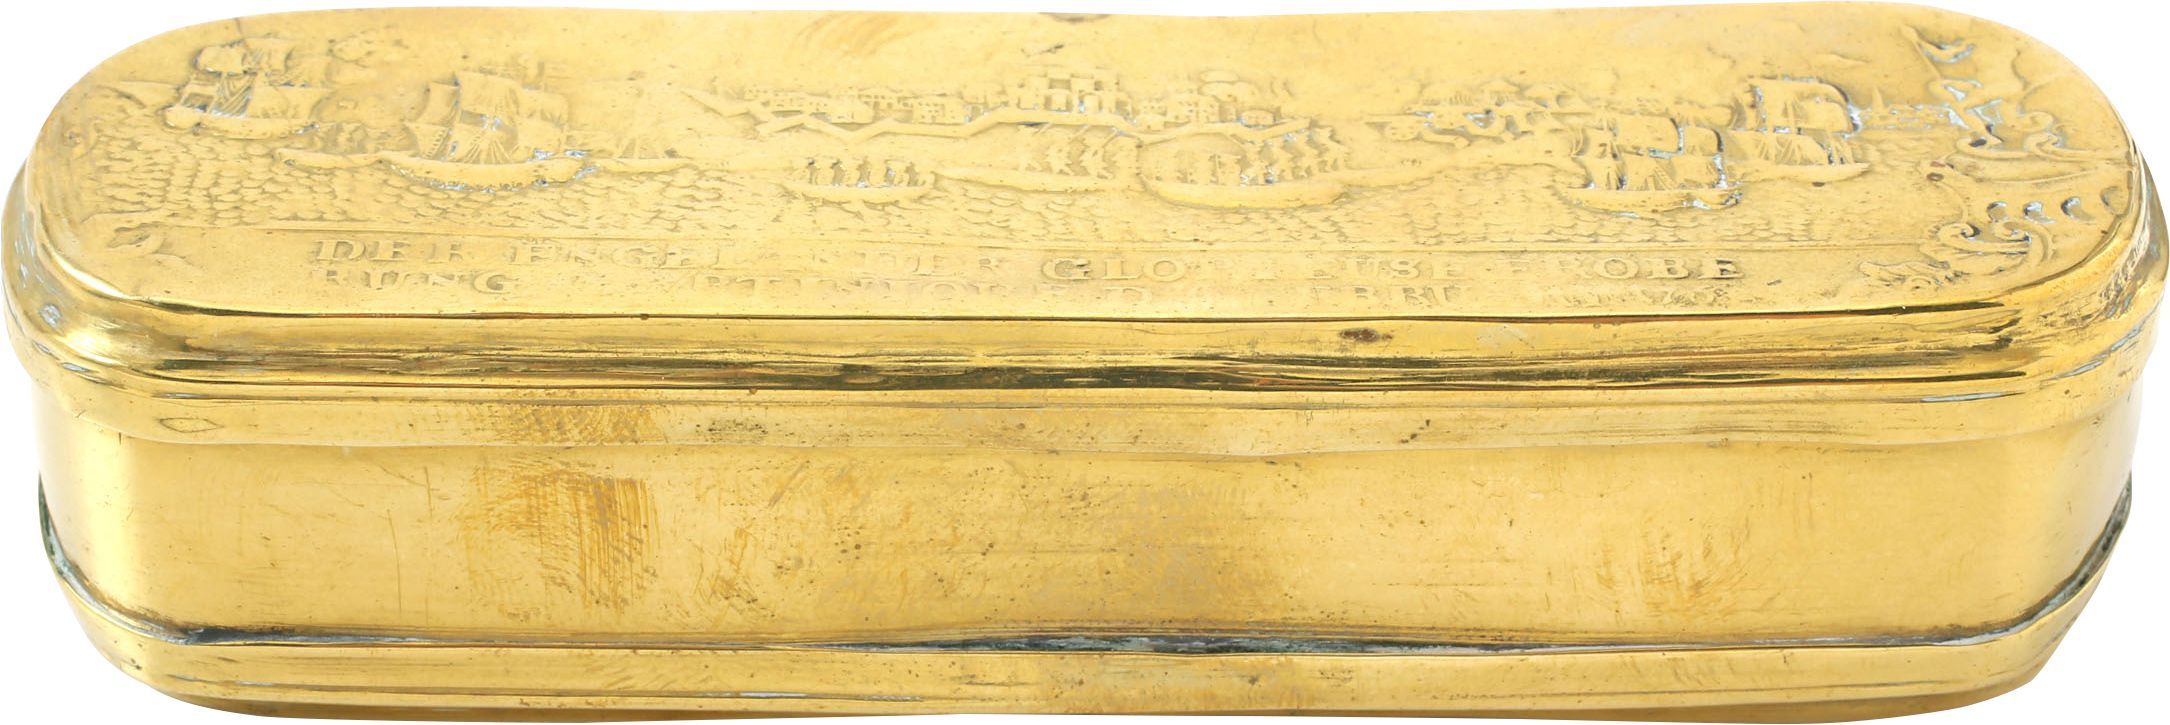 DUTCH TOBACCO BOX C.1770 - Fagan Arms